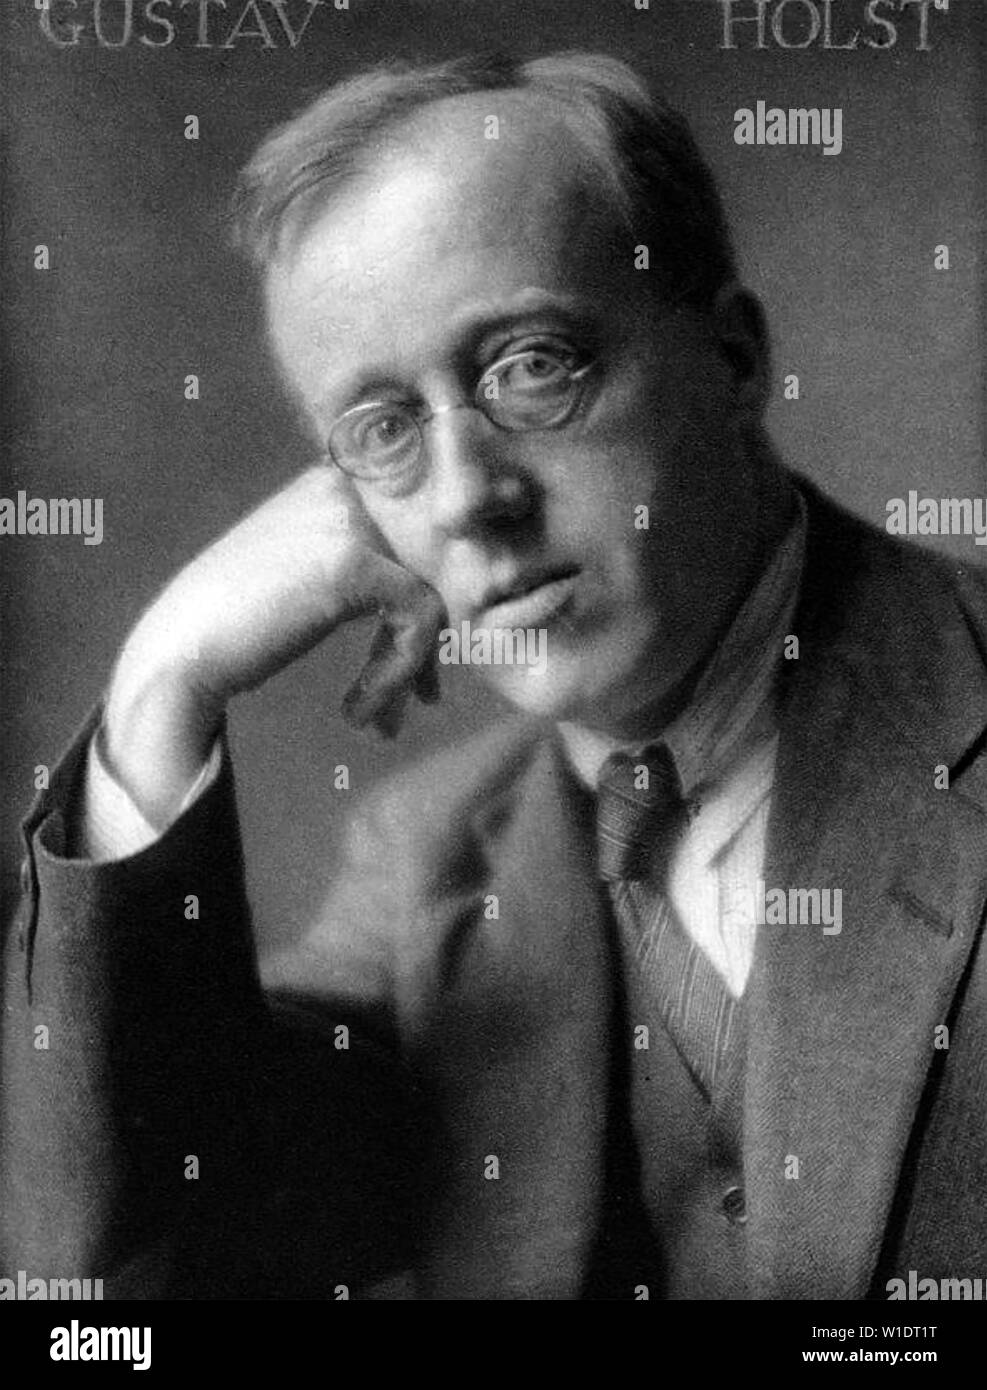 GUSTAV HOLST (1874-1934), compositore inglese circa 1921 Foto Stock